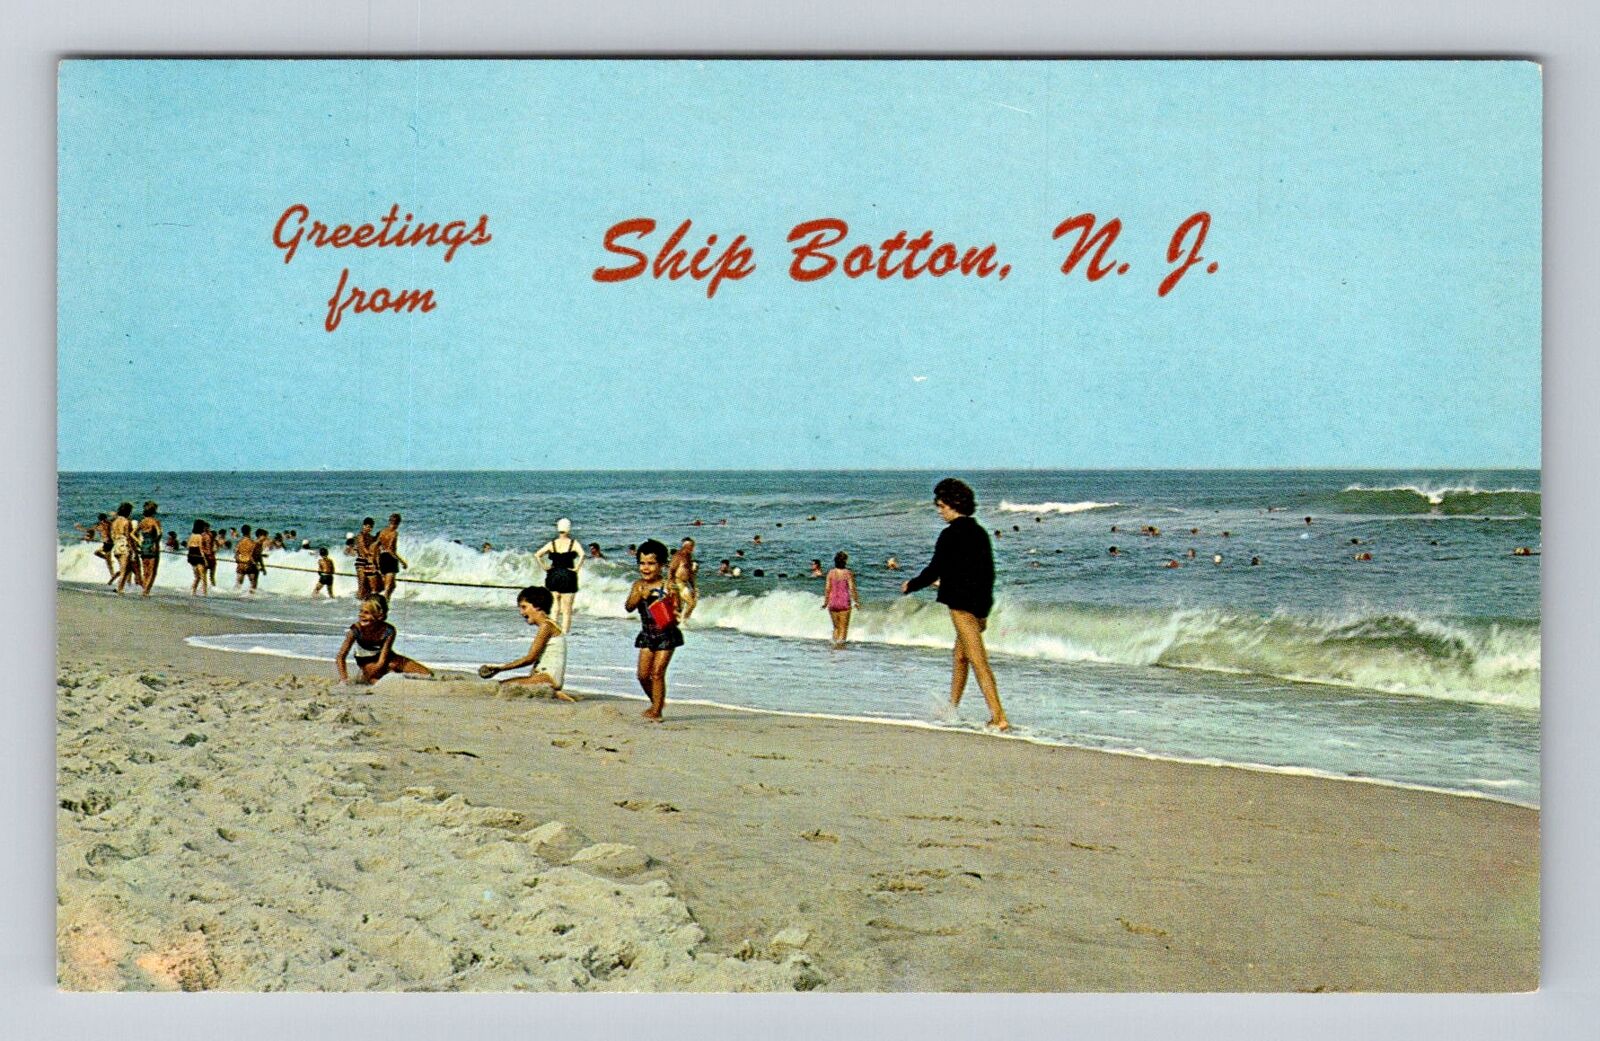 Ship Bottom NJ-New Jersey, General Greetings Beach Scene, Vintage Postcard